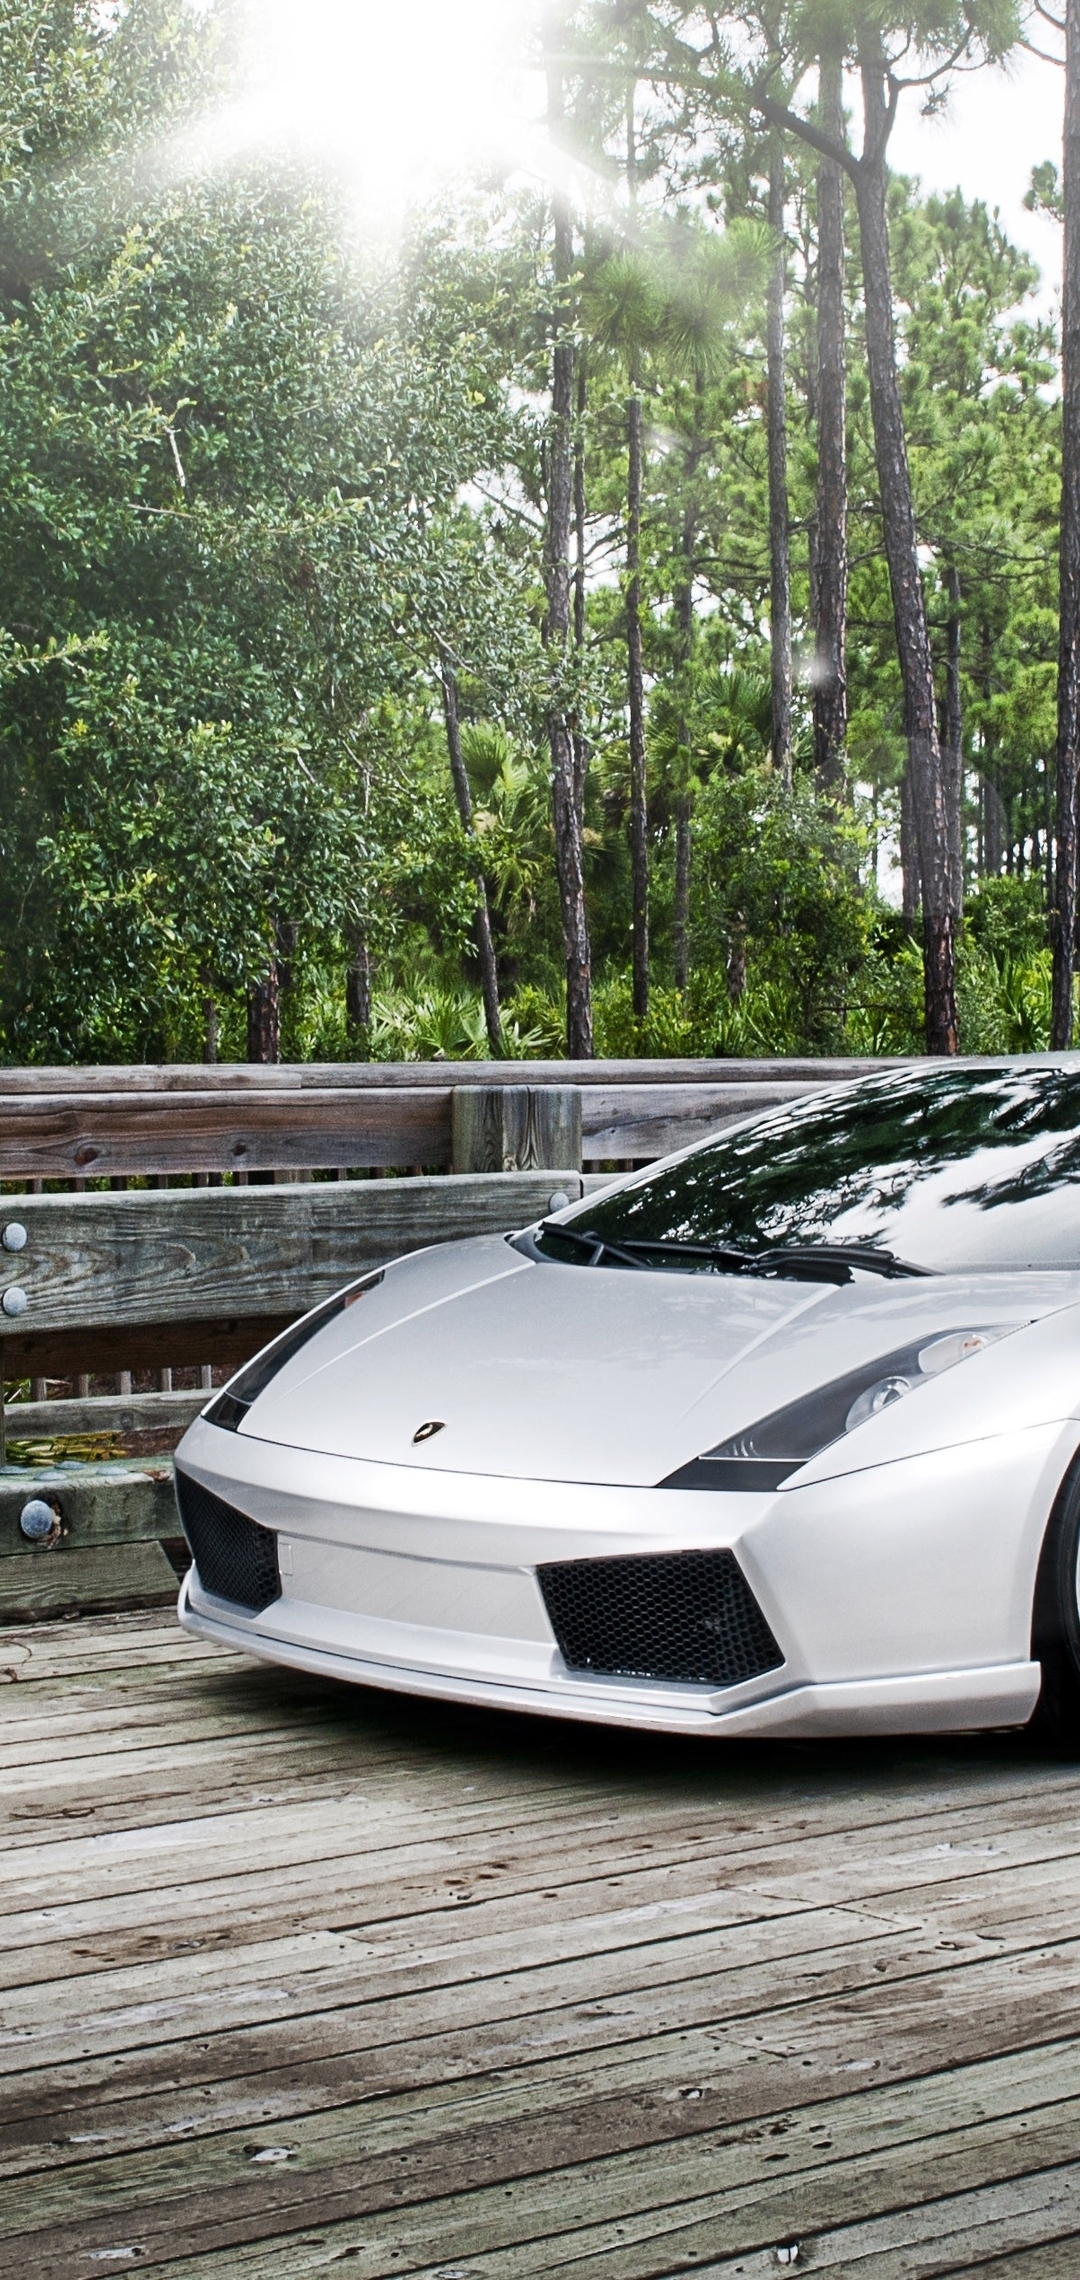 Картинка: Lamborghini, Gallardo, серебристый, суперкар, мост, доски, деревья, зелень